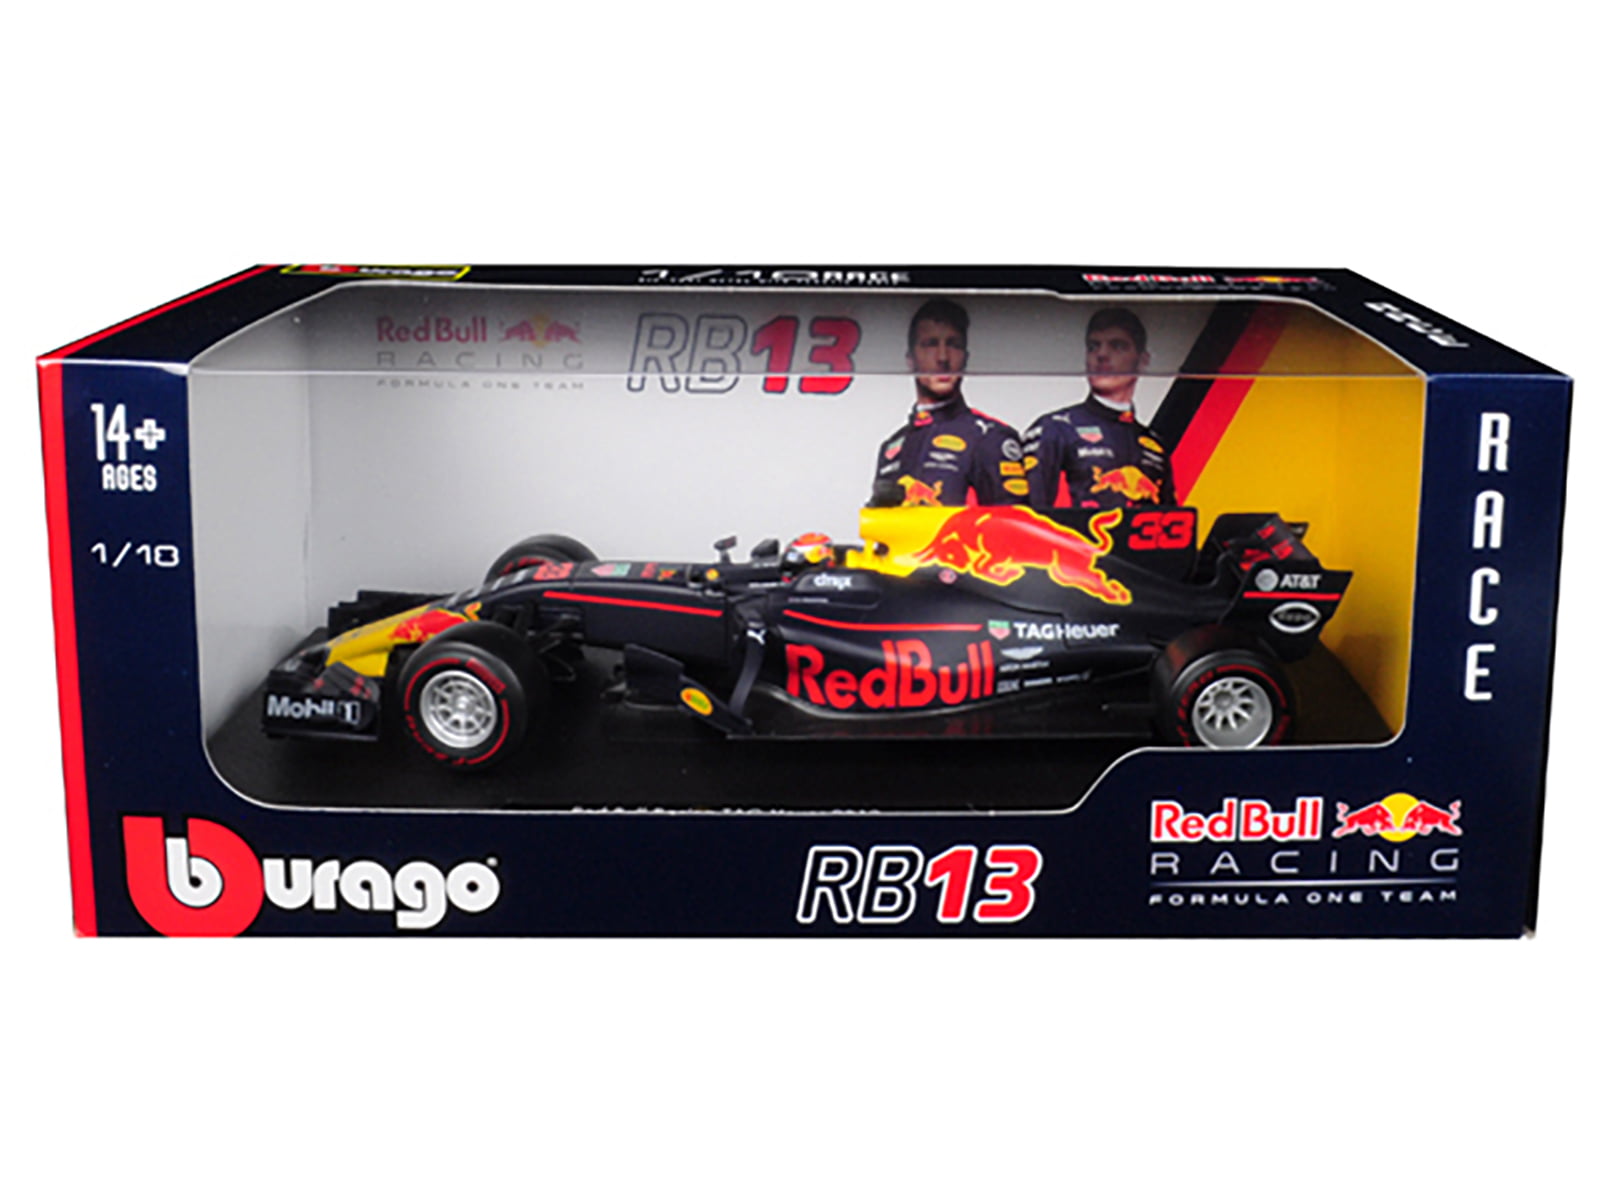 Renault Red Bull Racing TAG Heuer RB13 #33 Max Verstappen Formula One F1 1/18 Diecast by Bburago Walmart.com